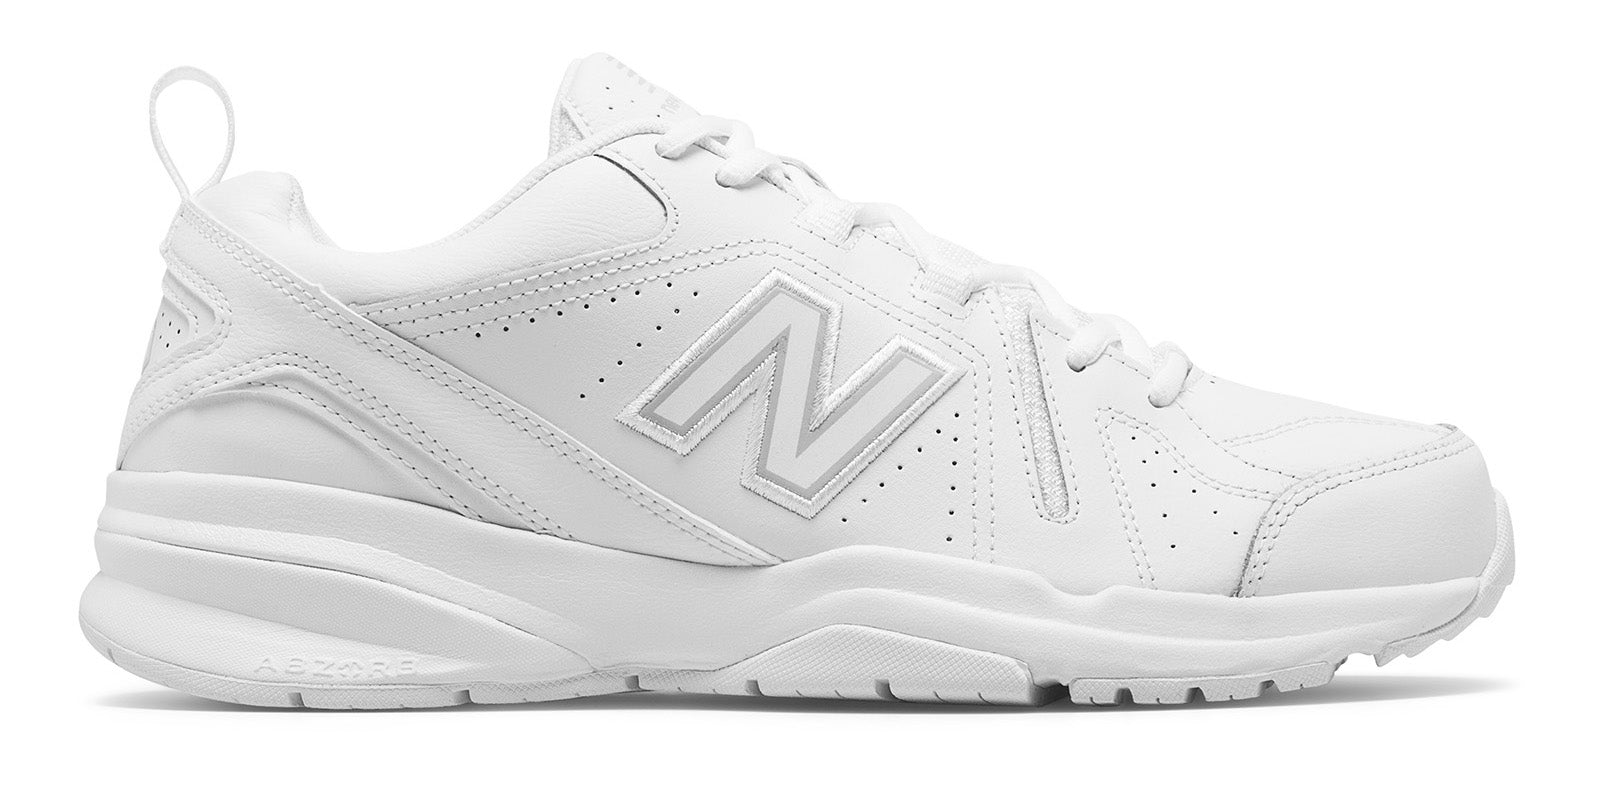 New Balance Men's 608 White Lace Training Shoe - Grady’s Feet Essentials - New Balance